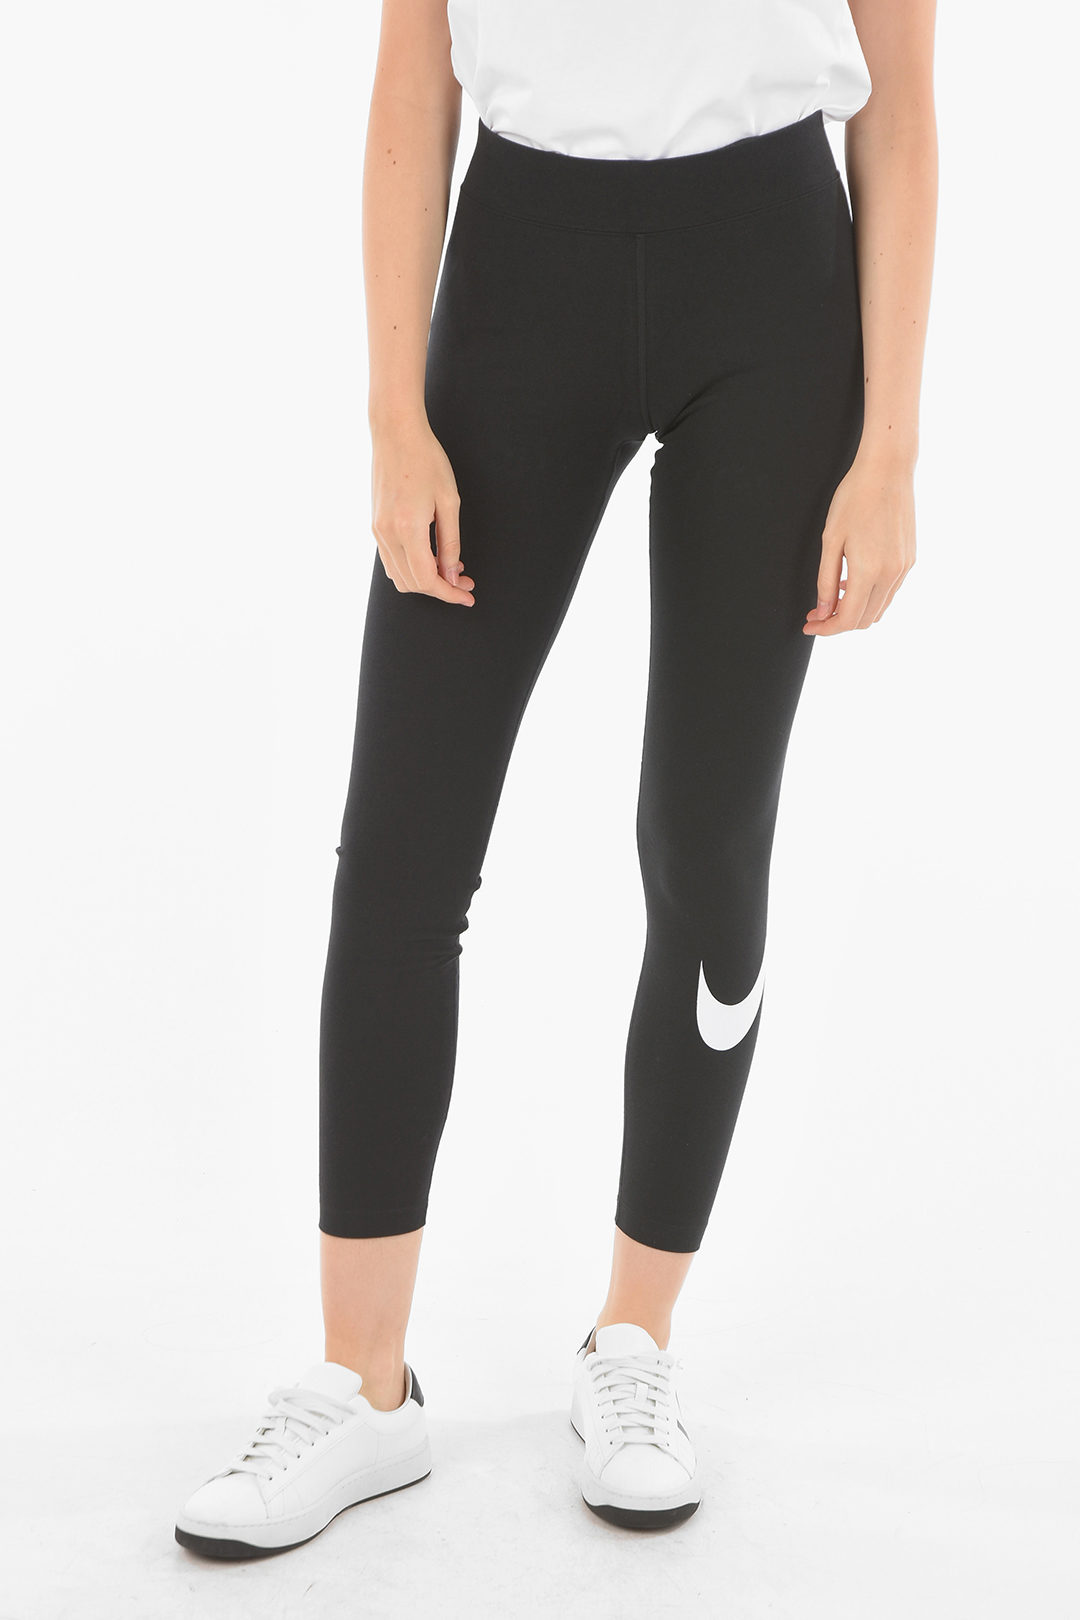 Nike Women's The One Df Leopard Print Legging - GREY/WHITE | littlewoods.com